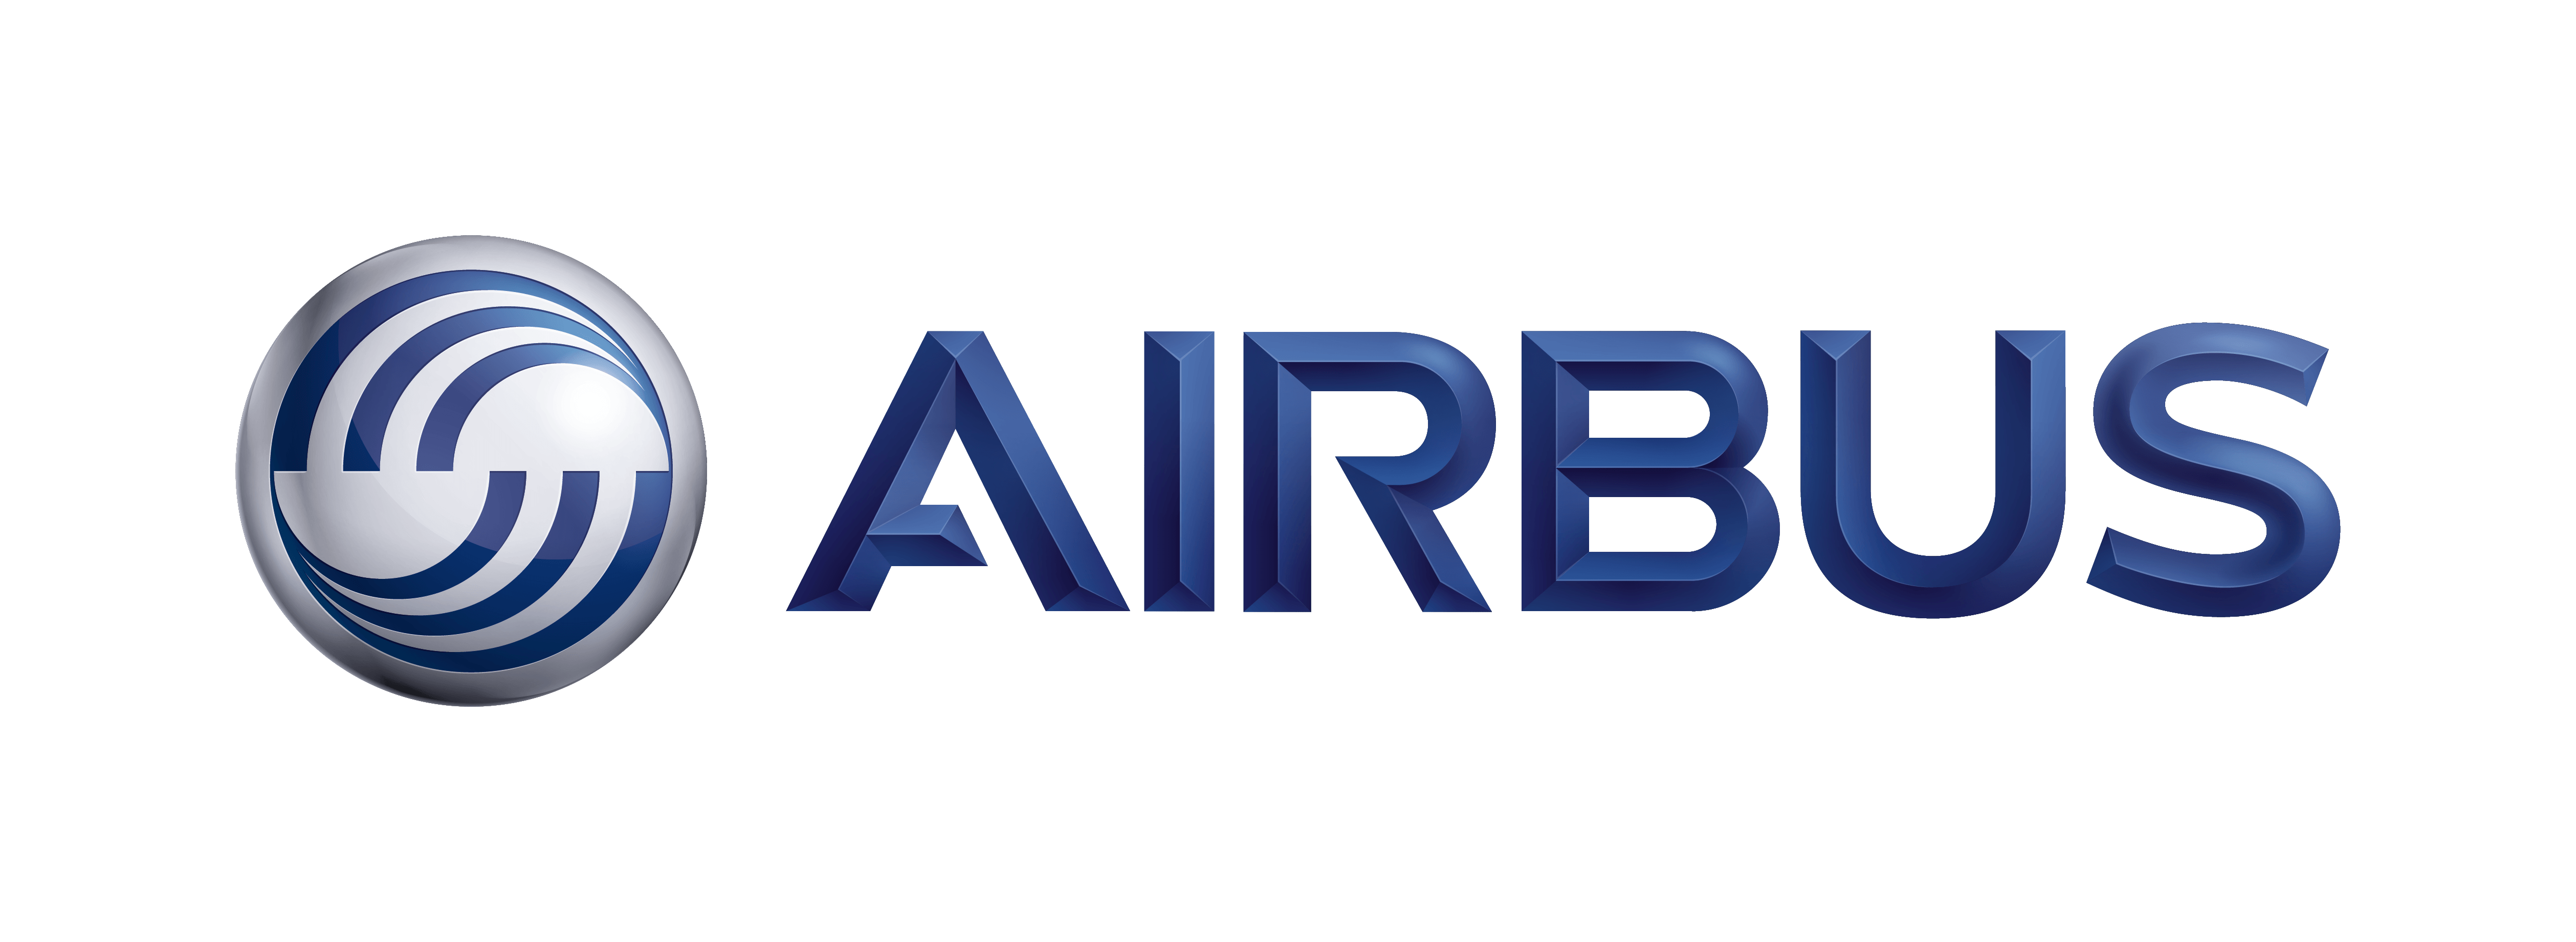 Airbus Logo Wallpapers - Wallpaper Cave